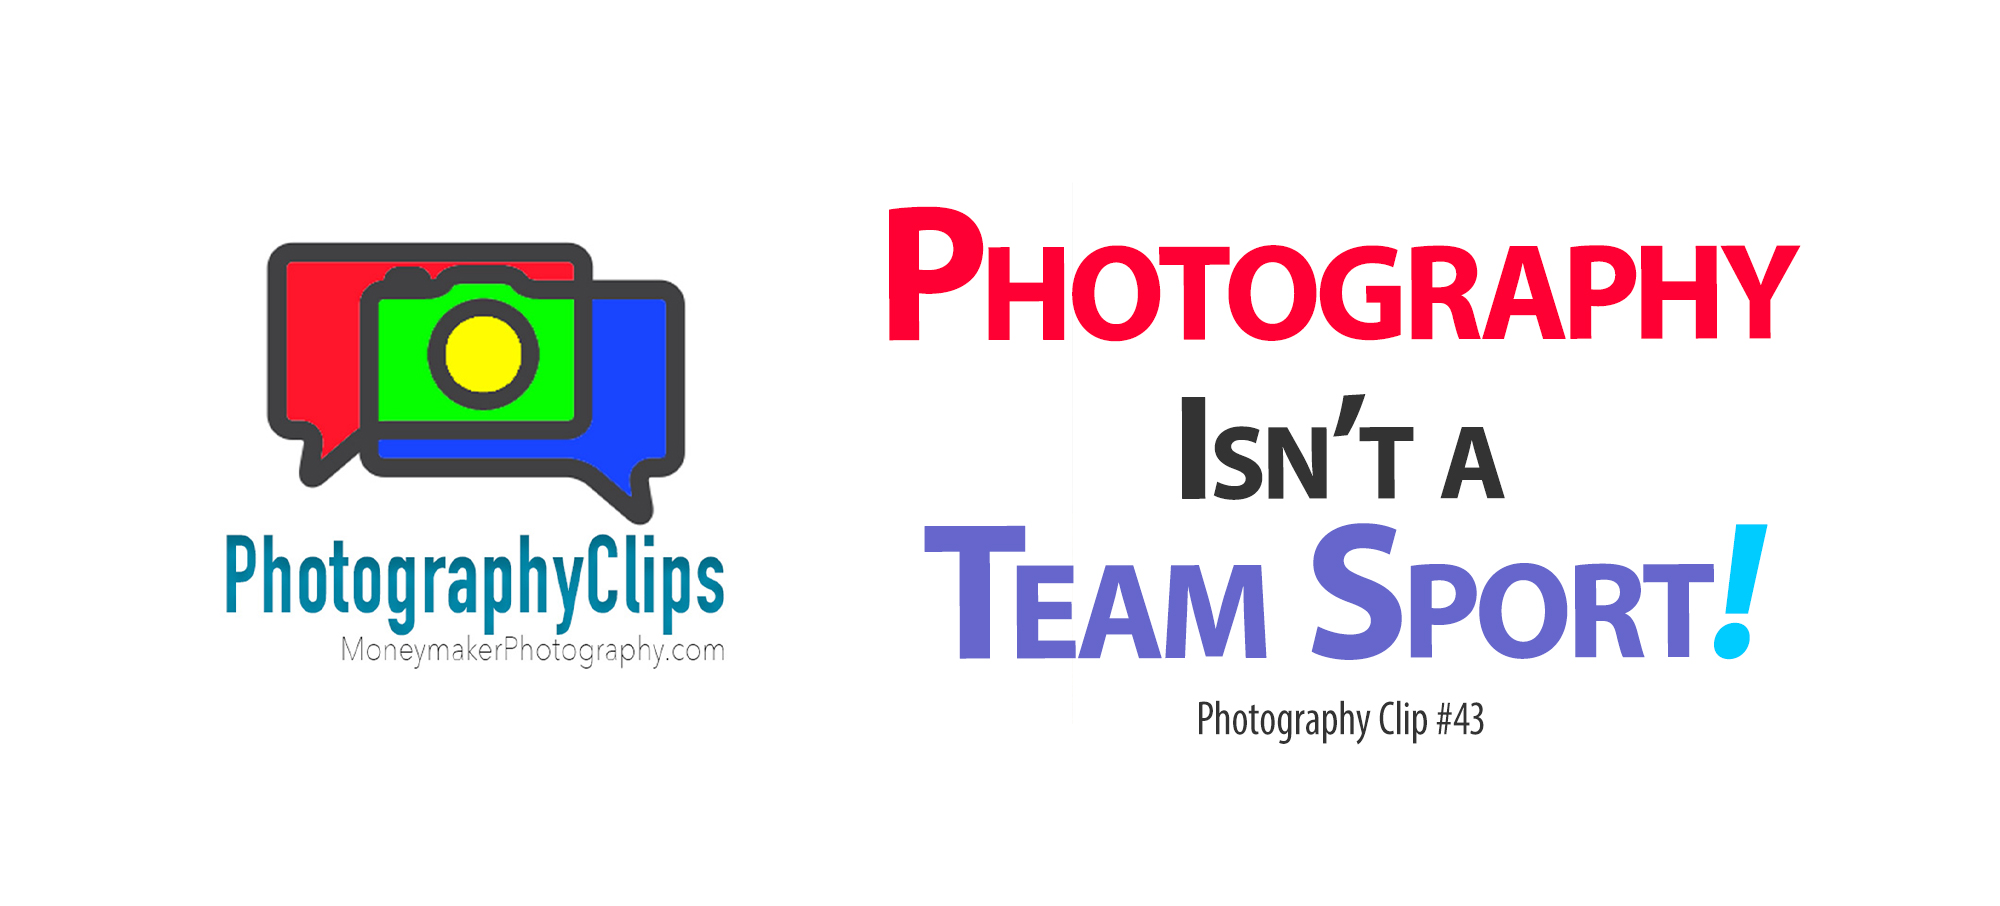 Photography Isn’t a Team Sport!